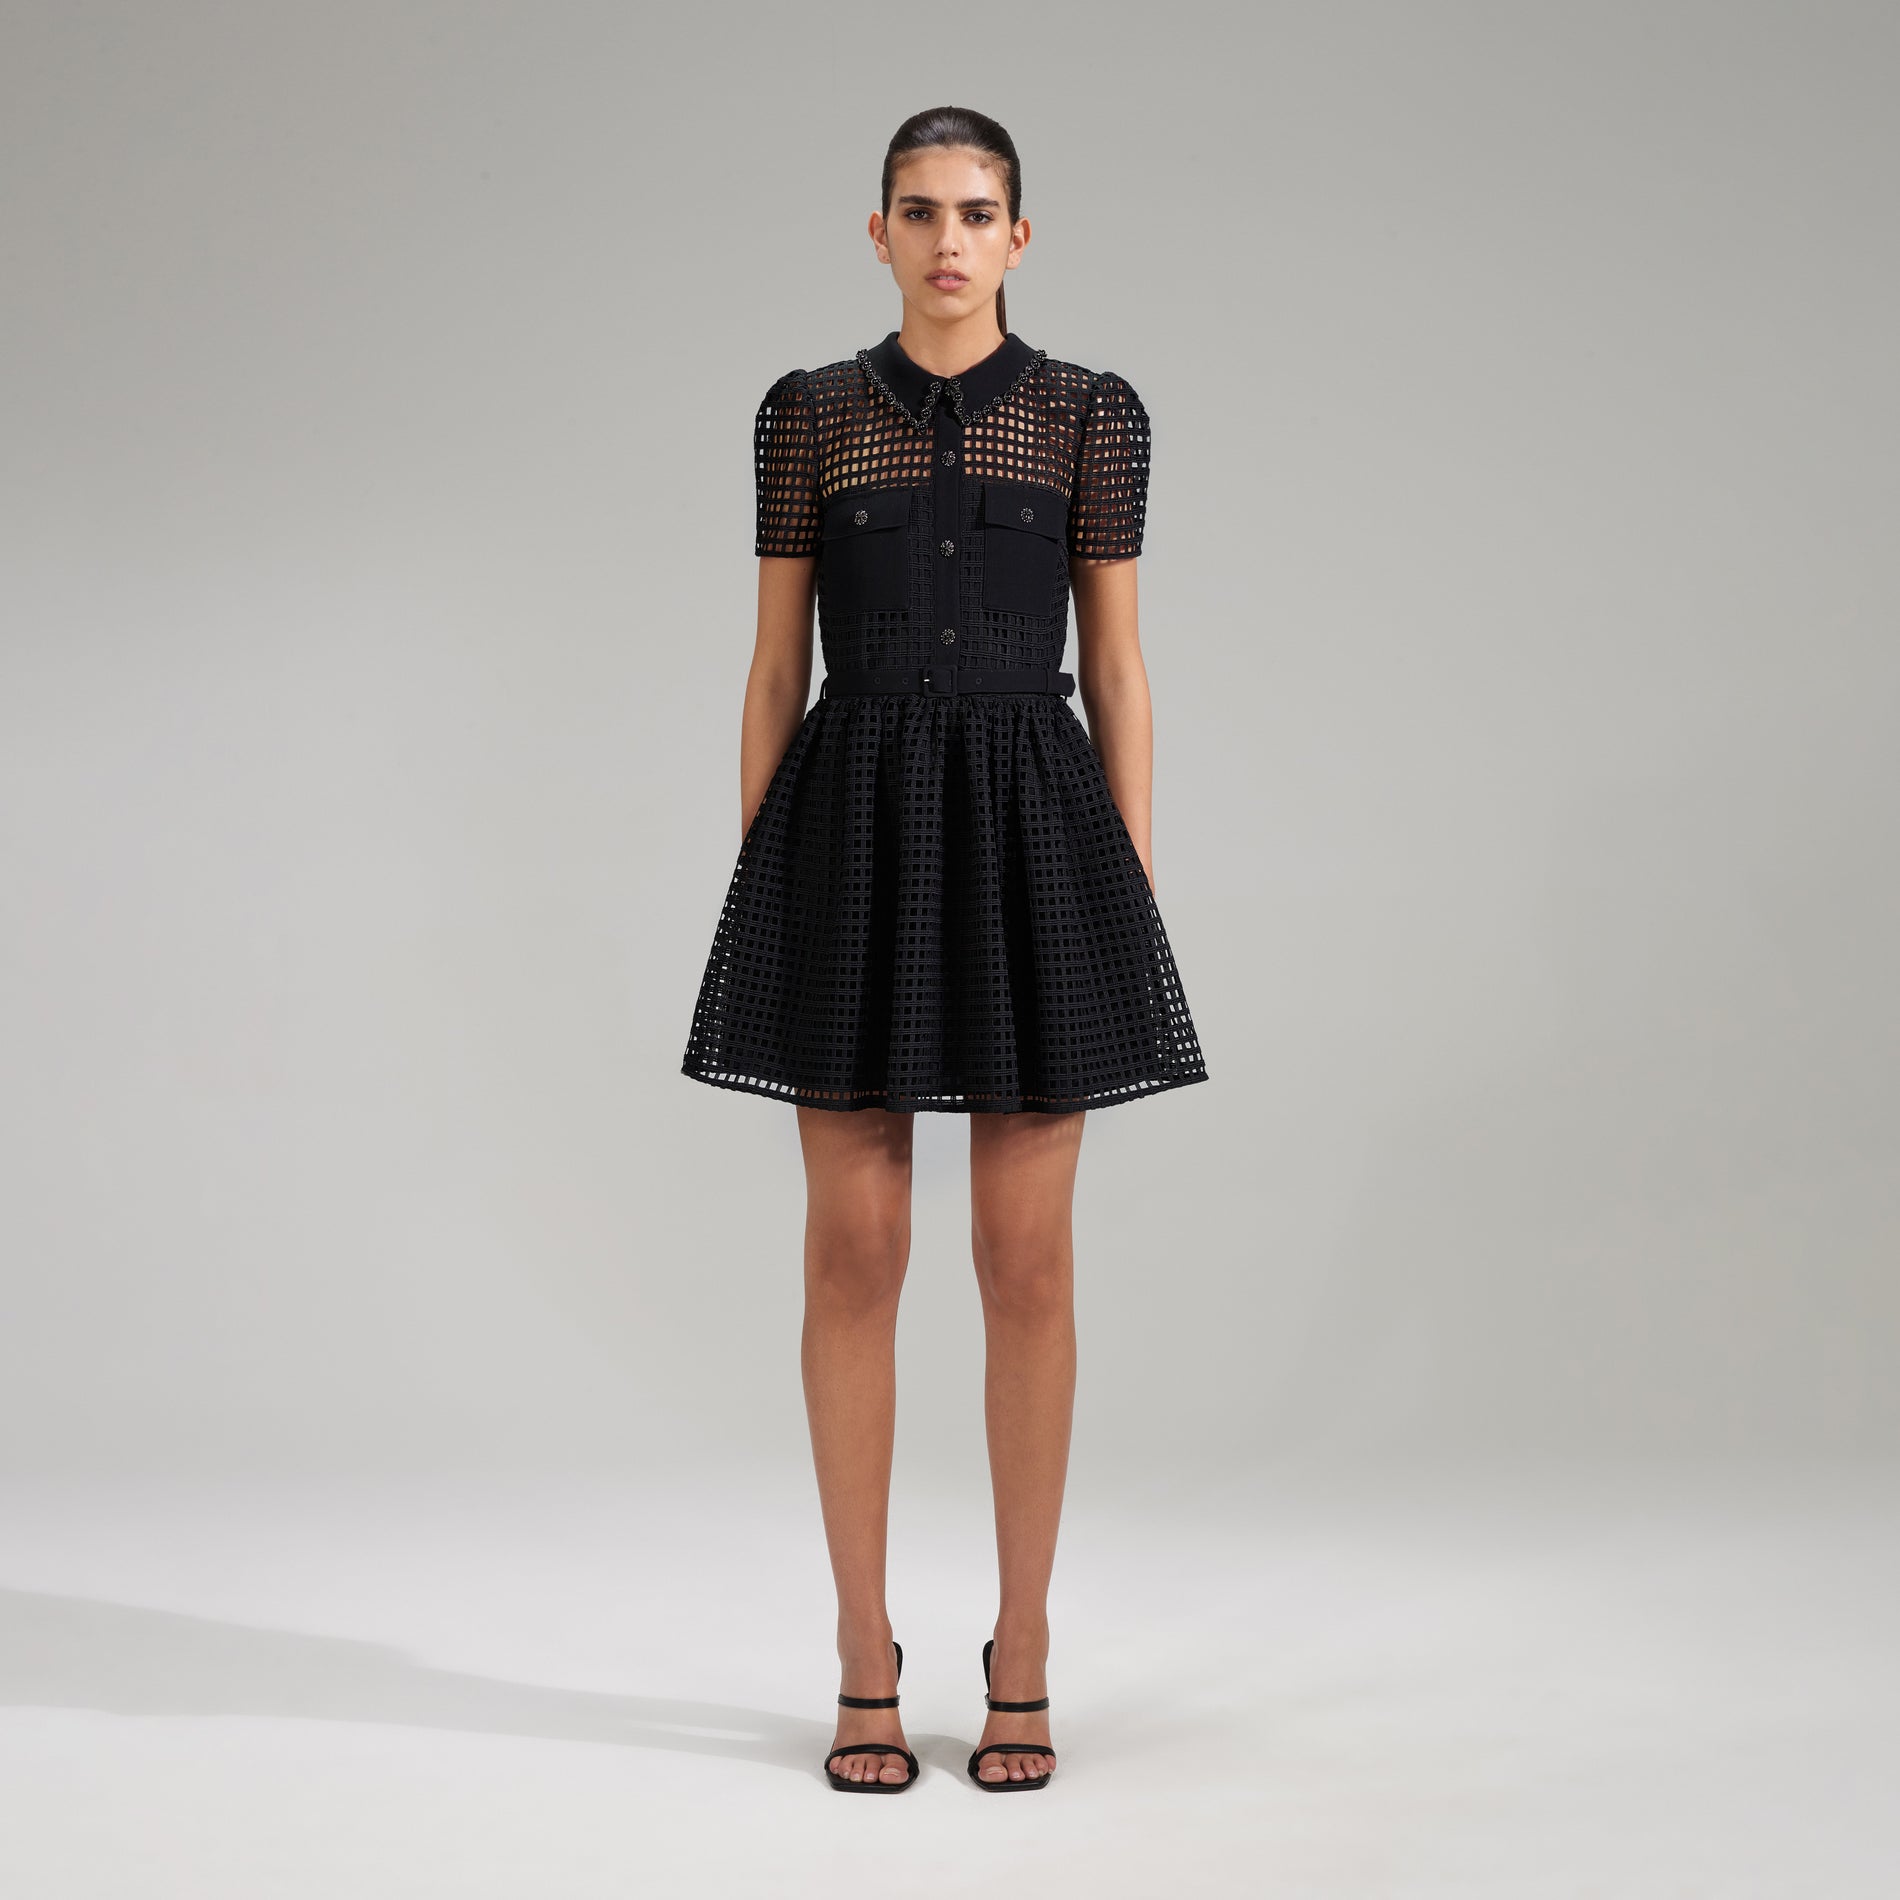 A woman wearing the Black Grid Lace Mini Dress